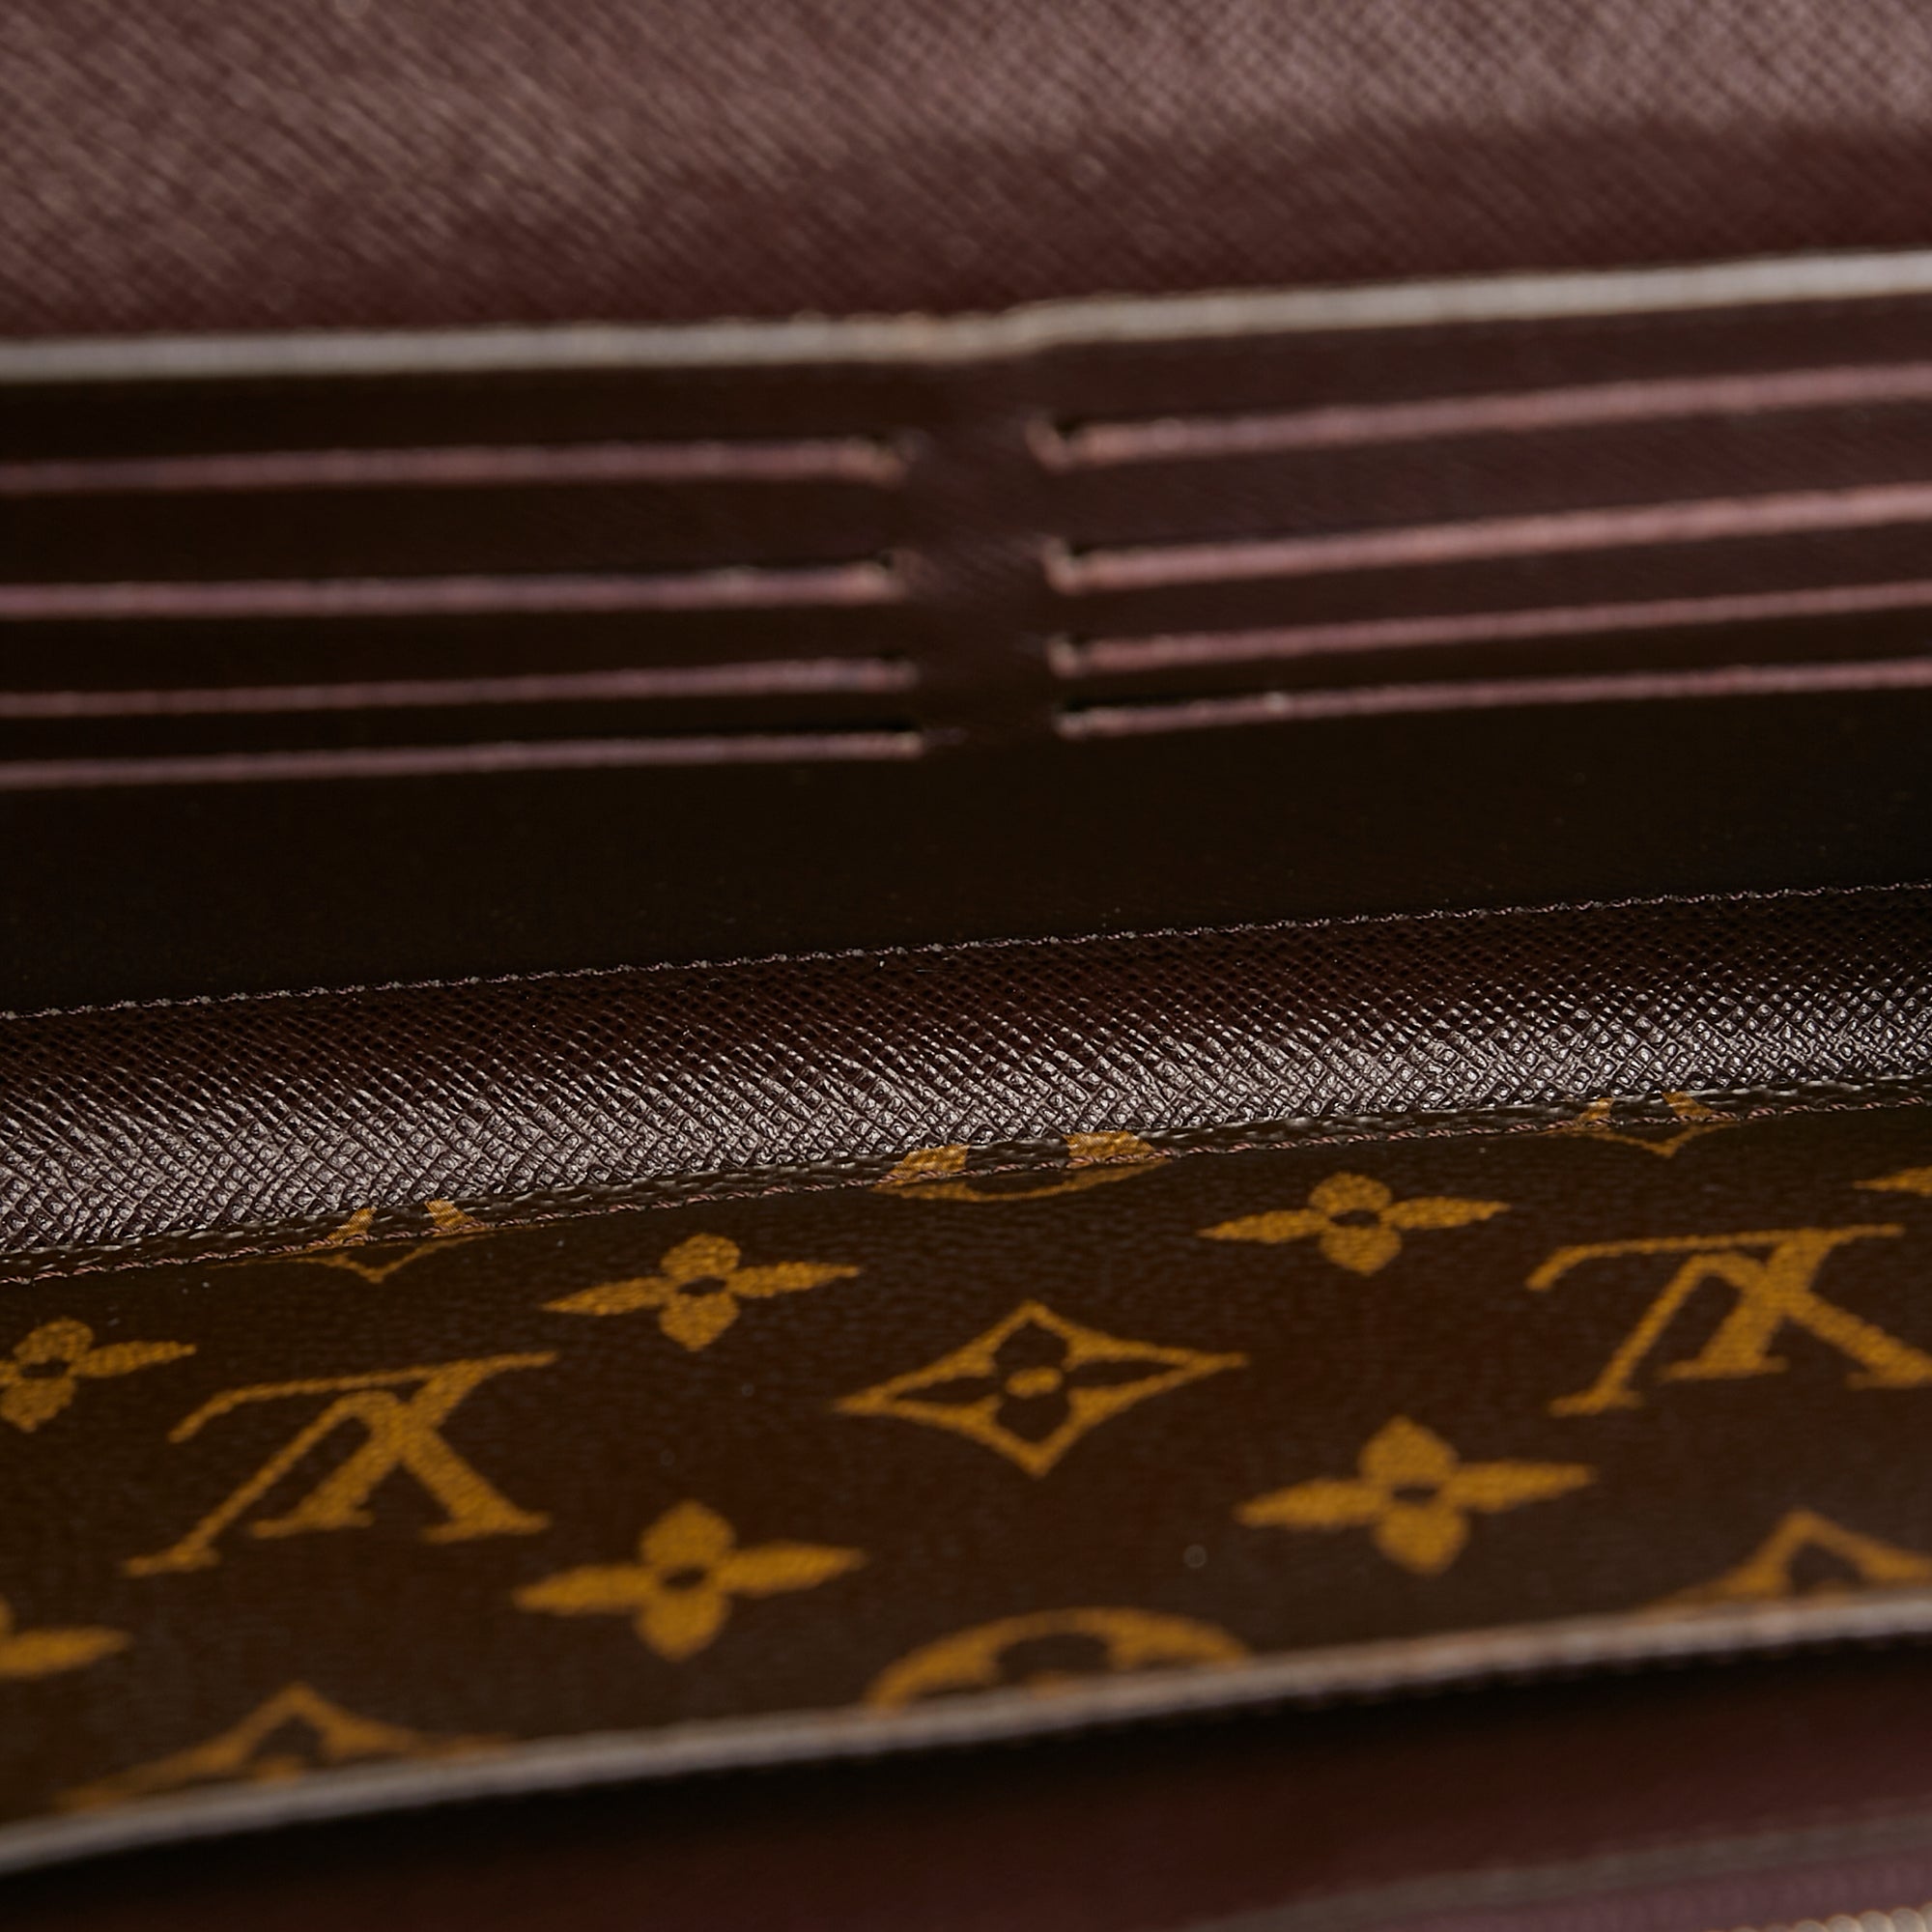 Louis Vuitton Epi Monogram Marie Rose Wallet in Pistache – I MISS